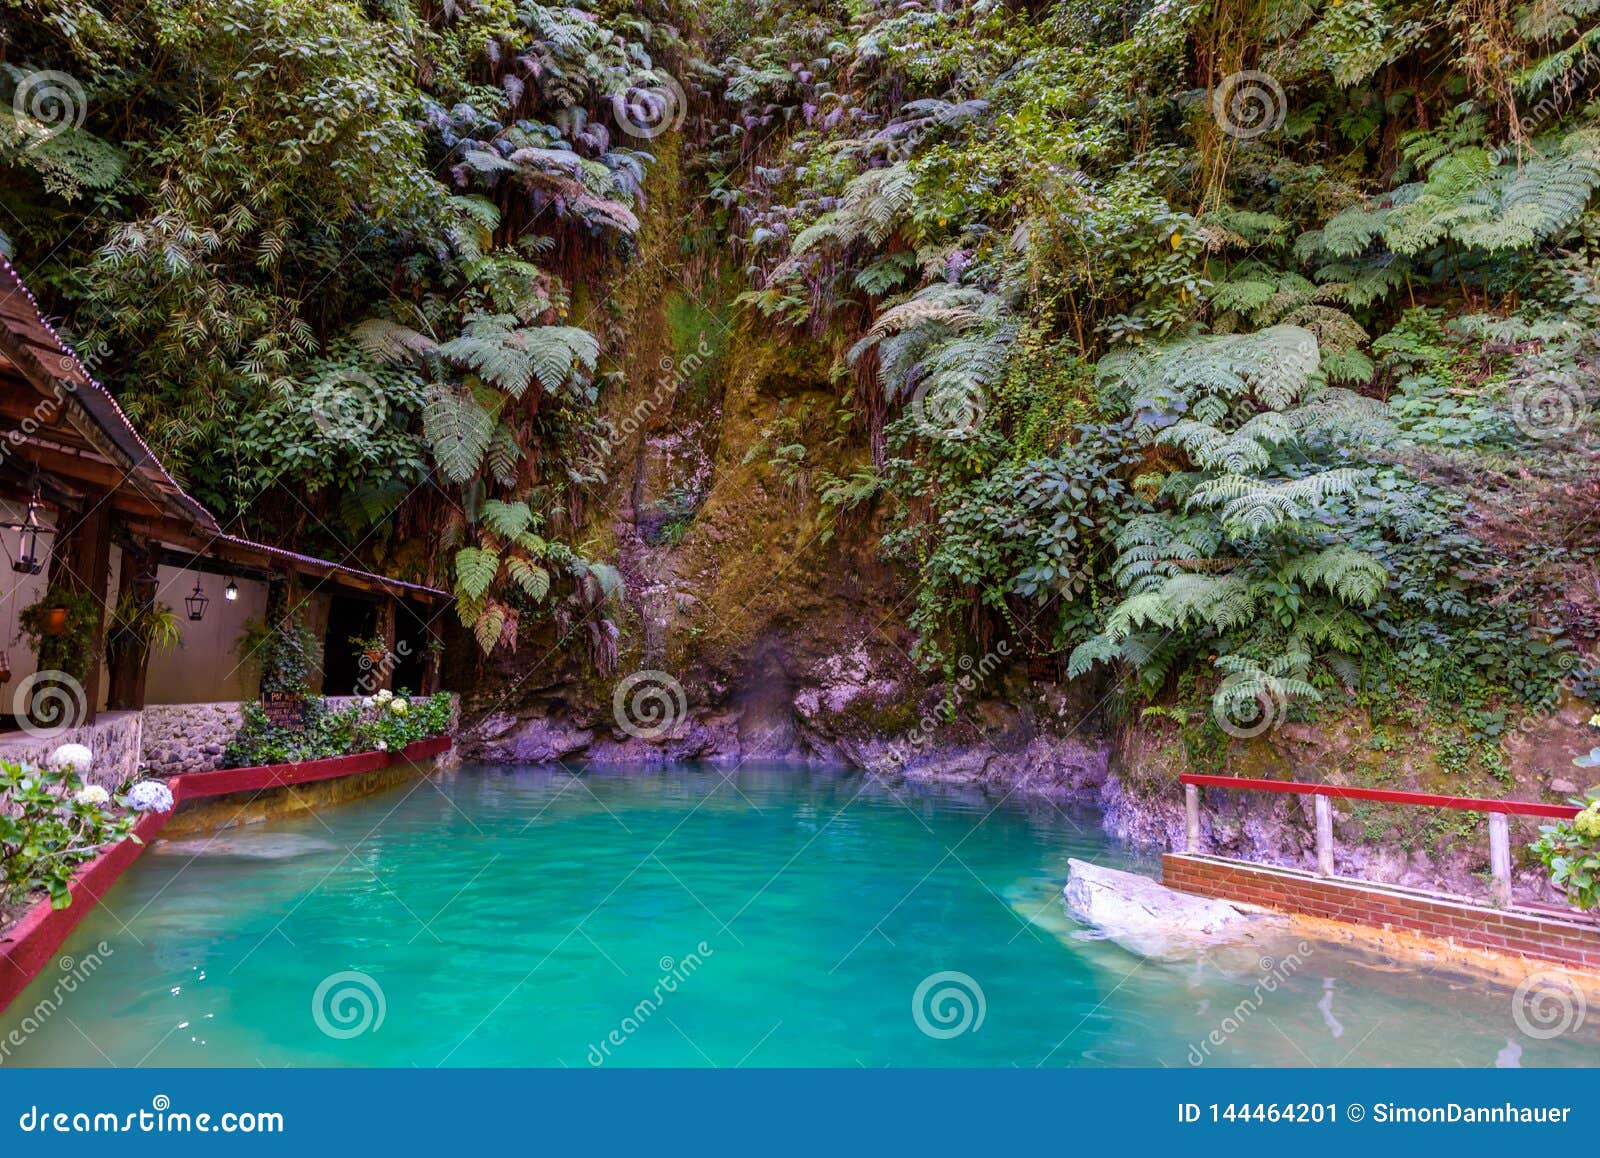 natural pool of fuentes georginas - hot springs around zunil and quetzaltenango - xela, guatemala